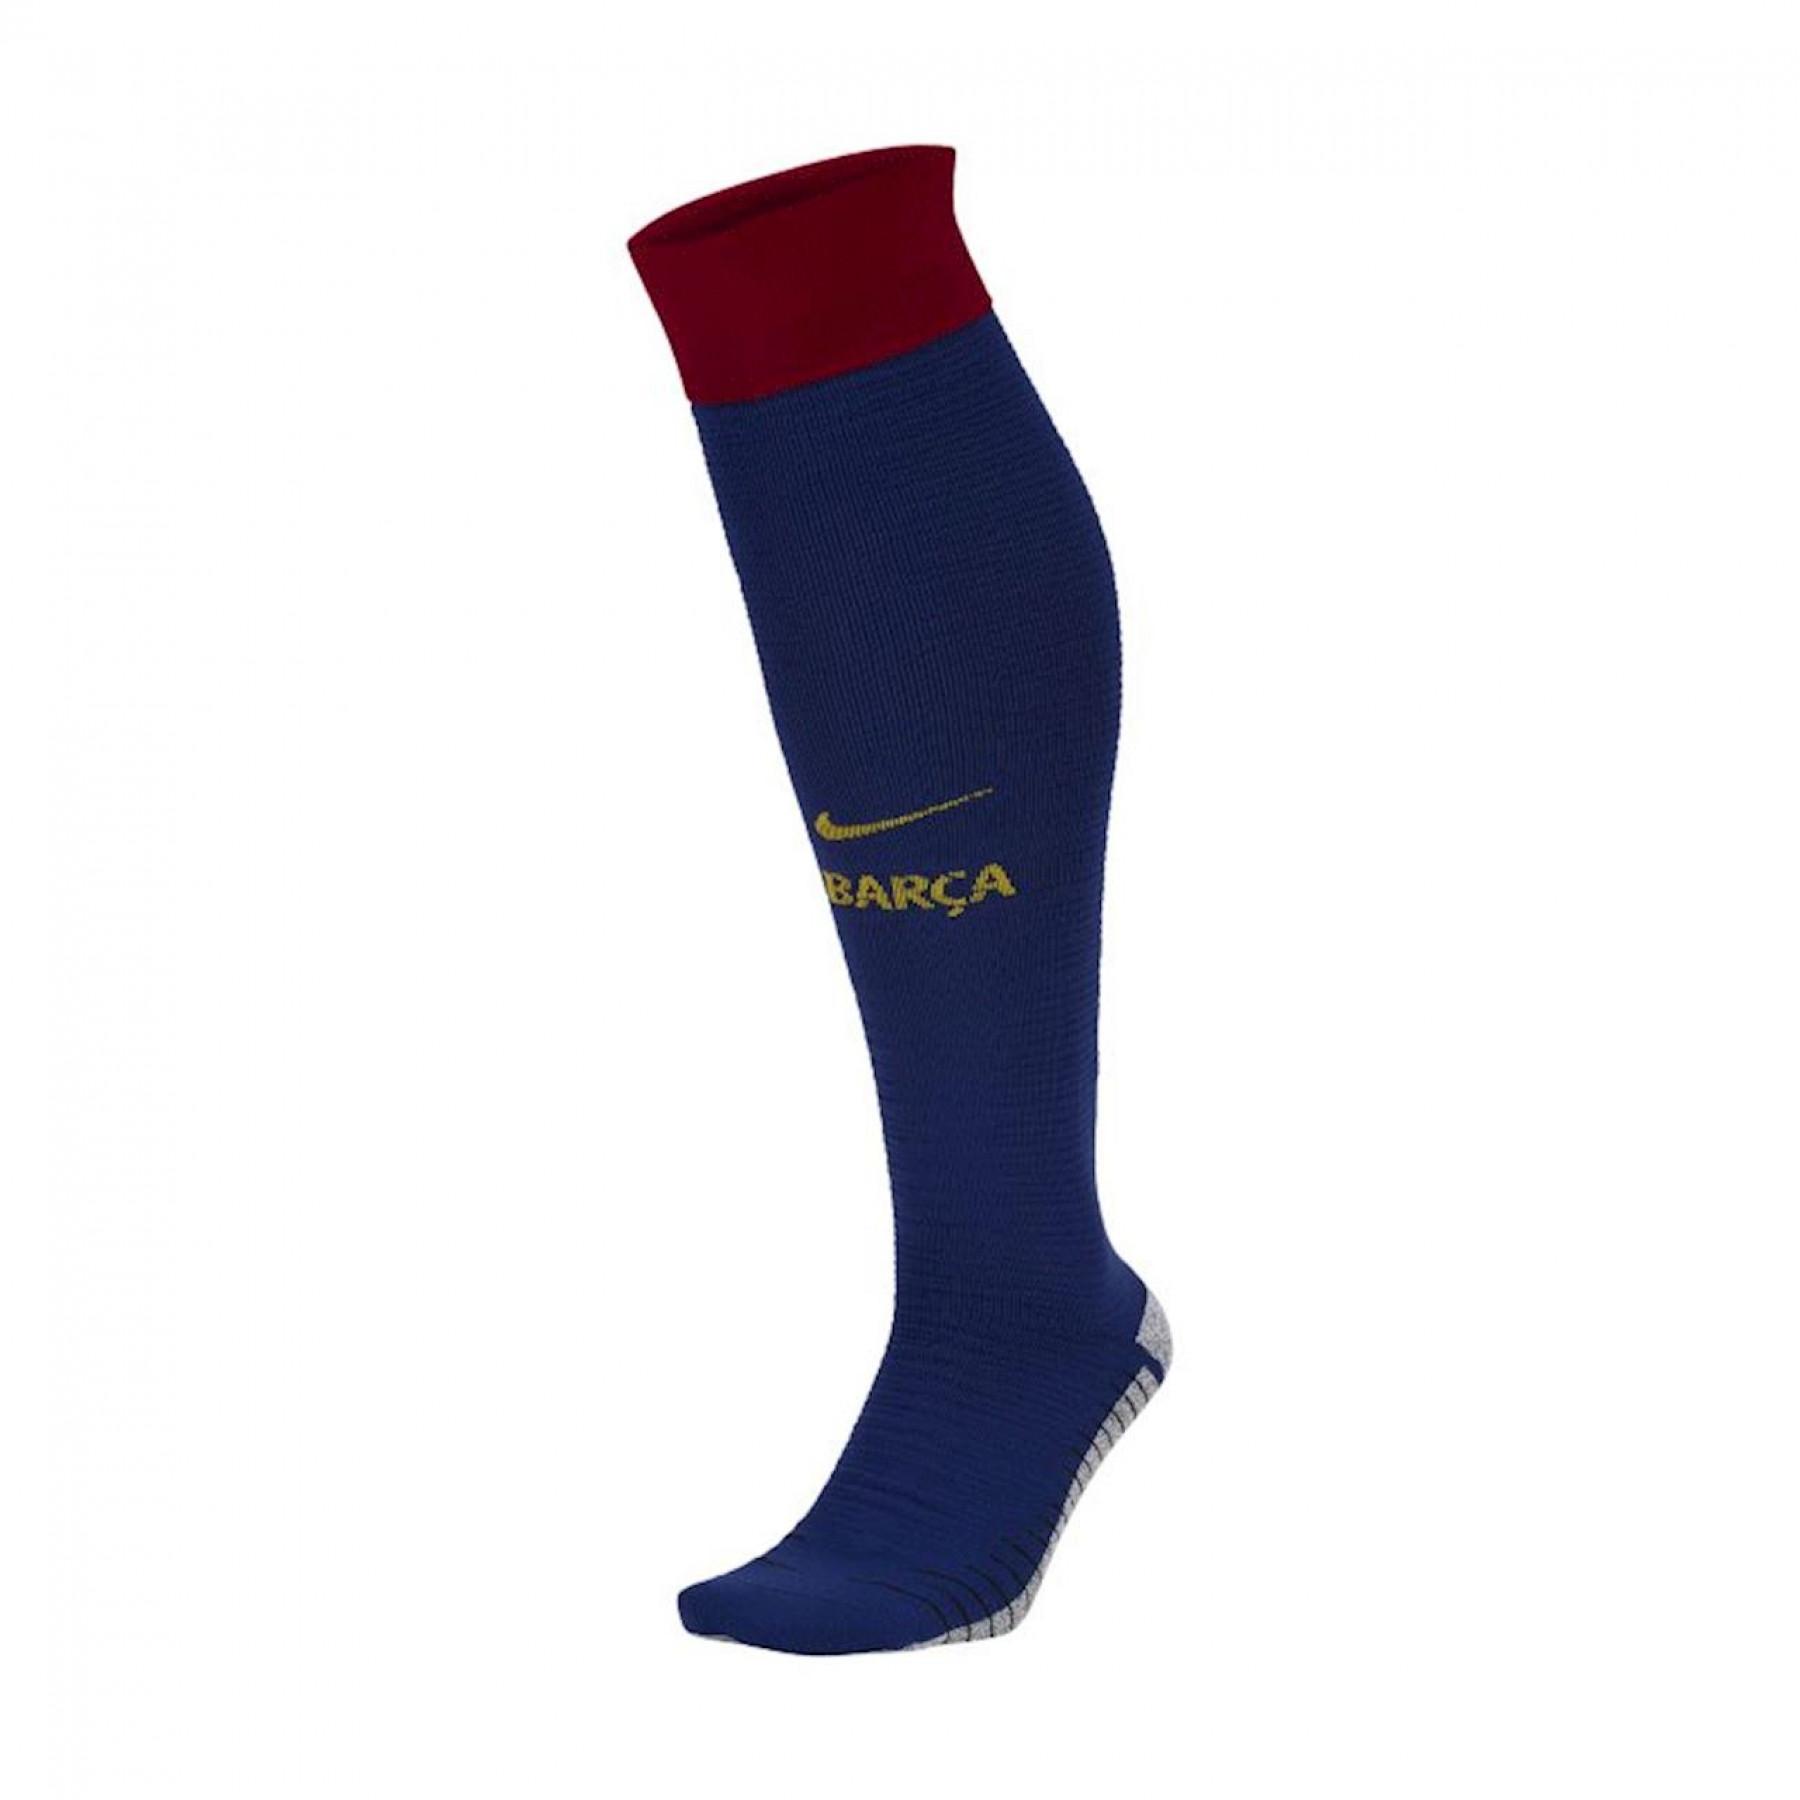 Authentic barcelona socks 2019/20